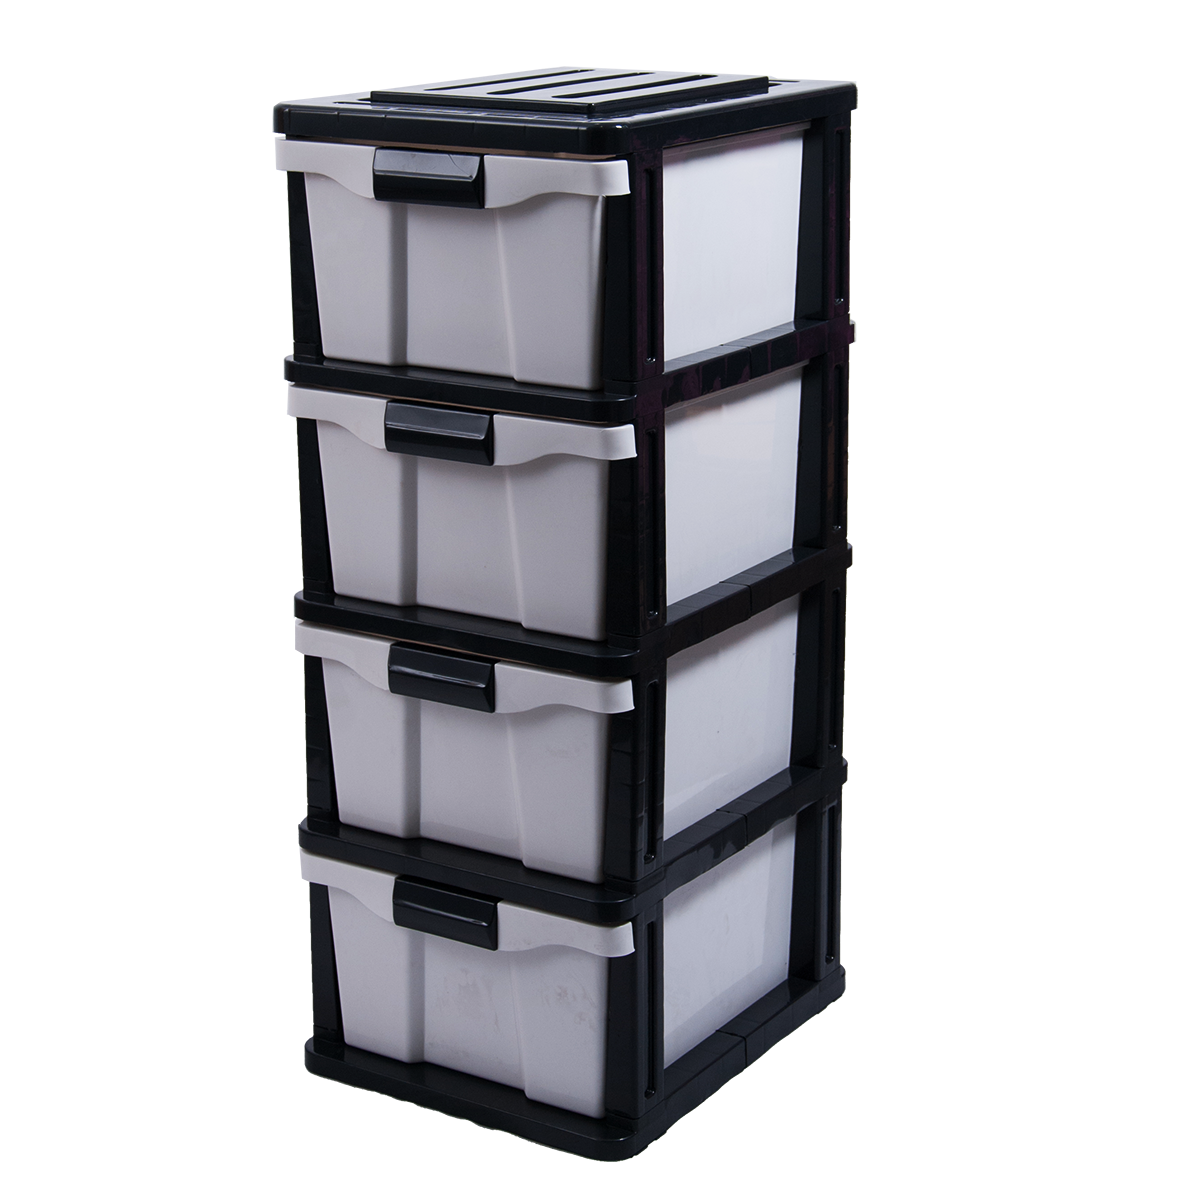 4 Drawer Compact Plastic Storage Black & White - Dollars and Sense